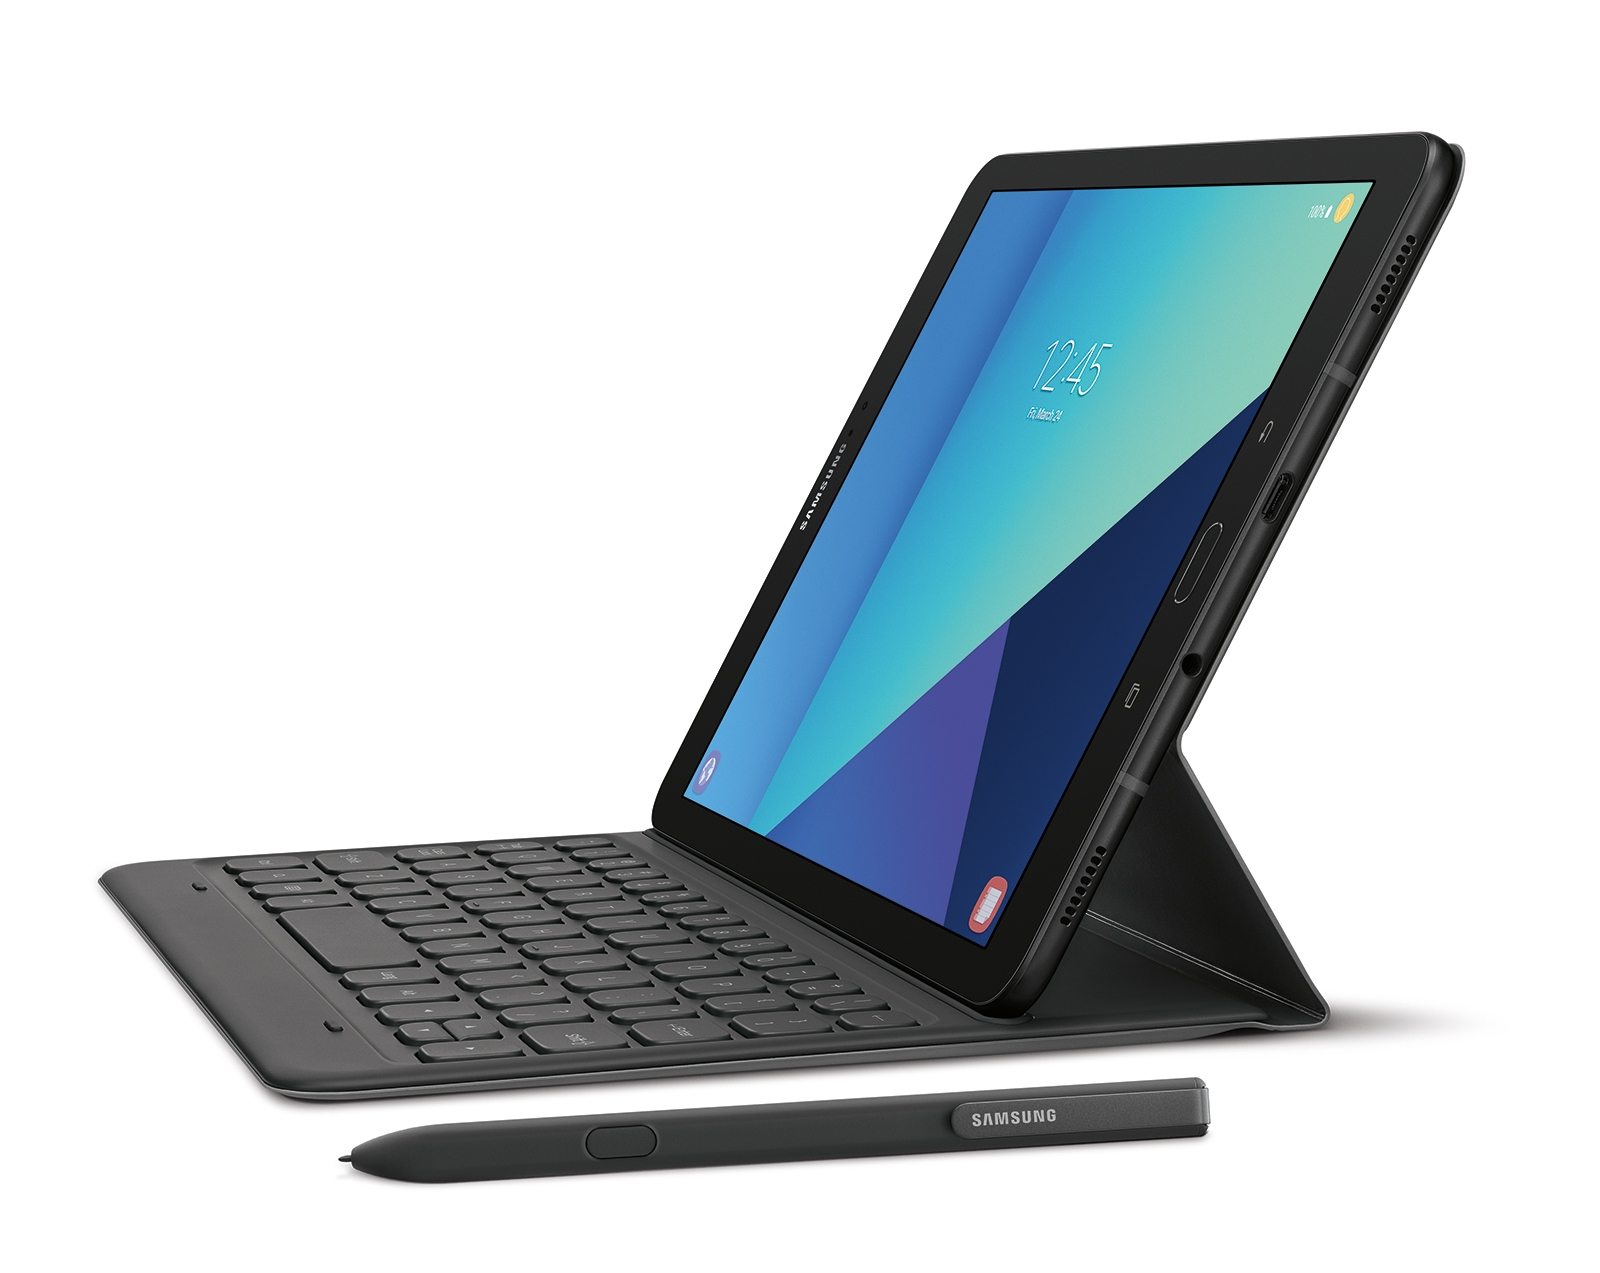 Samsung Galaxy Tab S3: 9.7 inch tablet SM-T820NZKAXAR | Samsung US